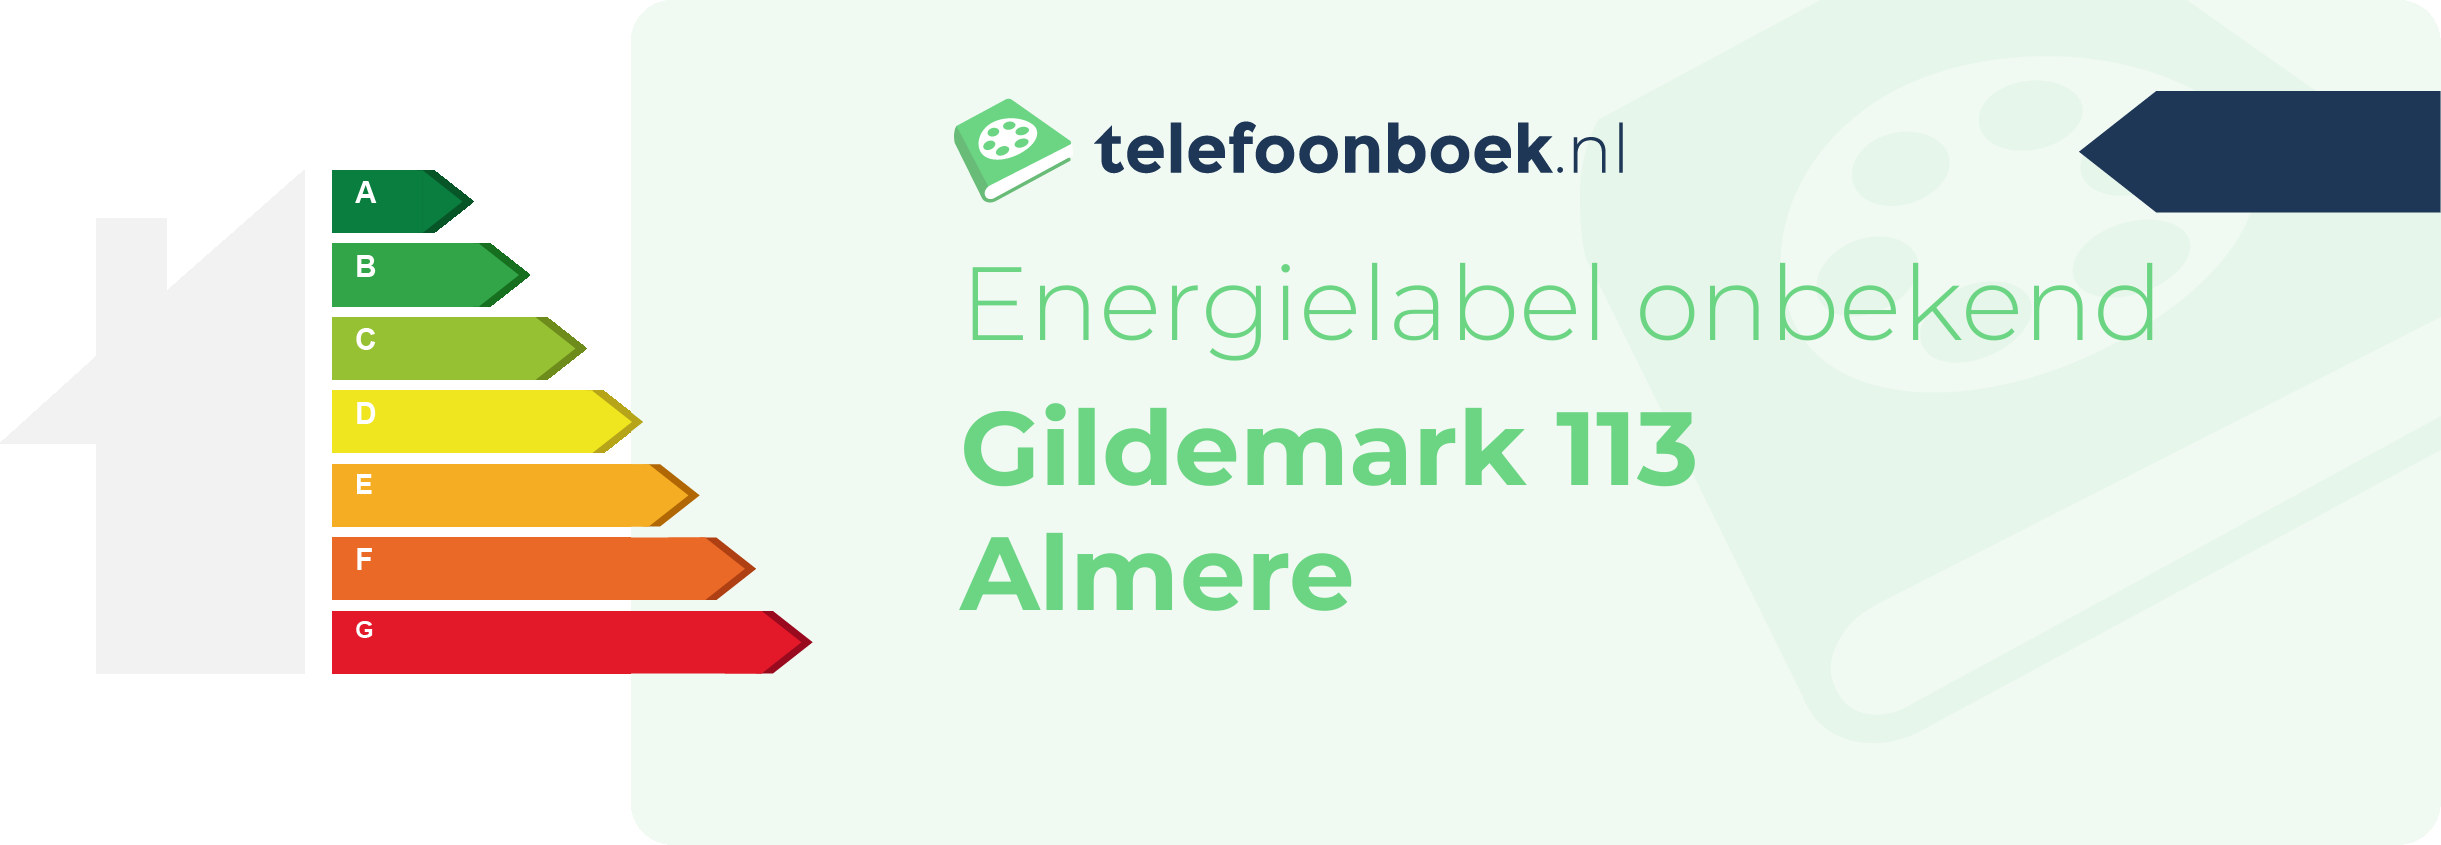 Energielabel Gildemark 113 Almere